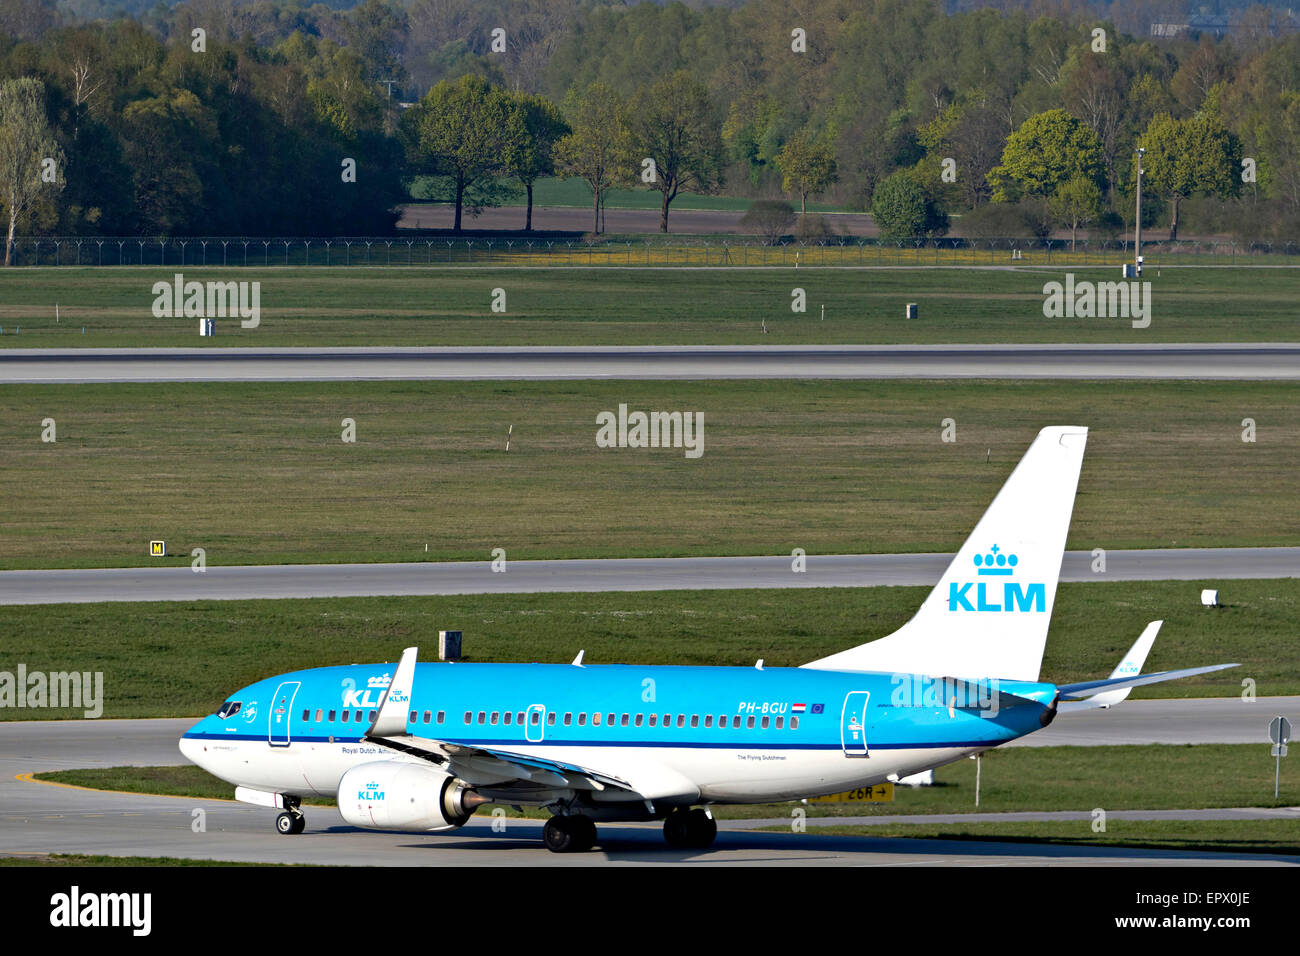 KLM Boeing 737-700 passenger aircraft taxiing at, Franz Josef Strauss International Airport, Munich, Upper Bavaria, Germany. Stock Photo